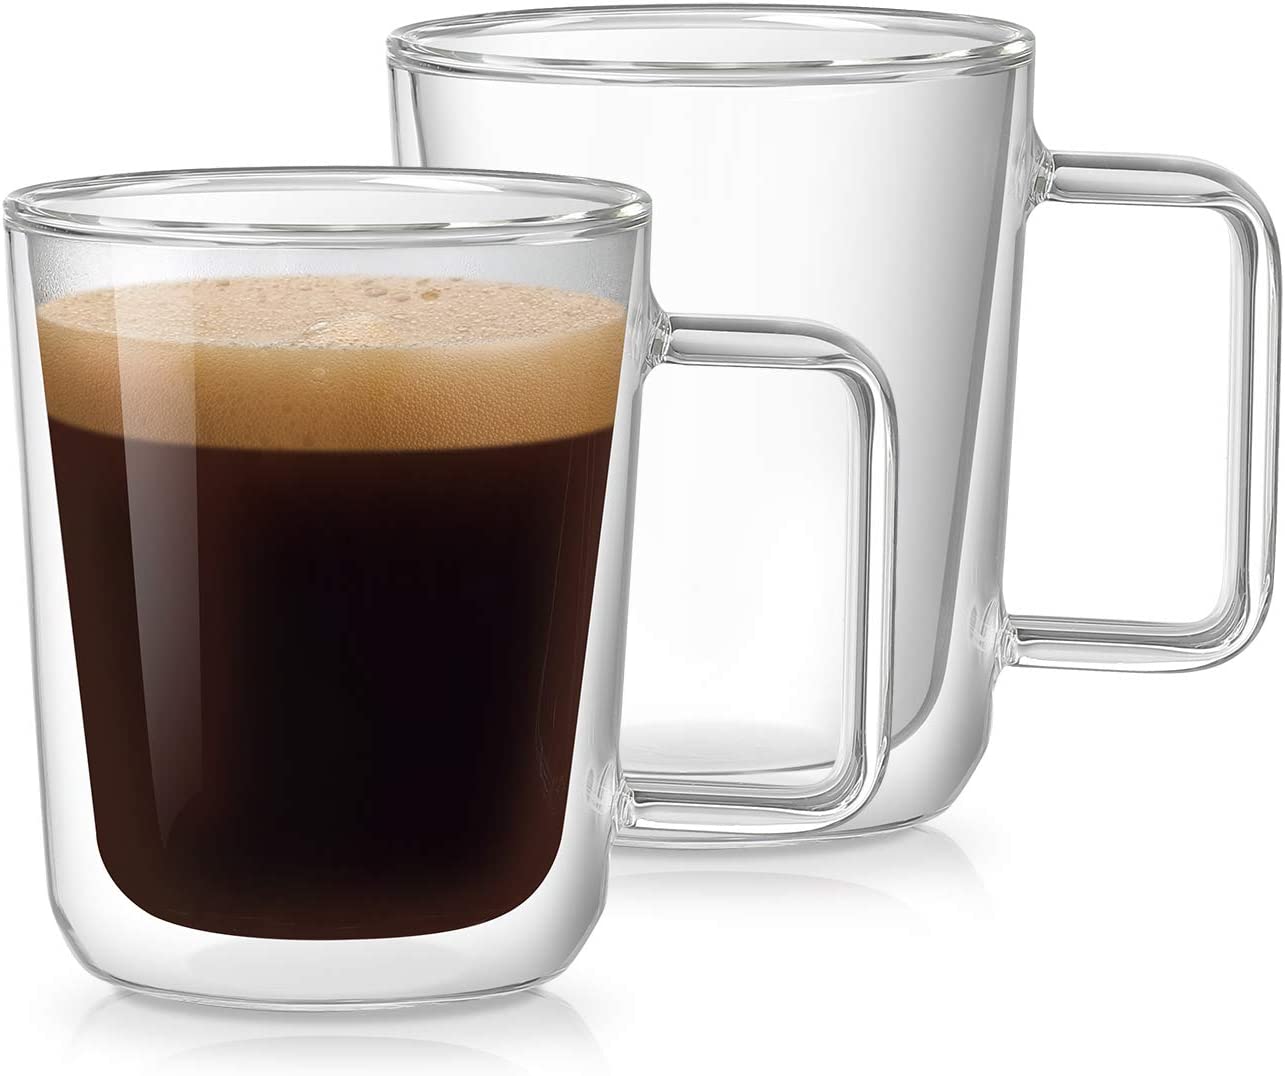 Epar'e 13 oz Double Wall Coffee Mugs Set of 2 - Large Iced Latte